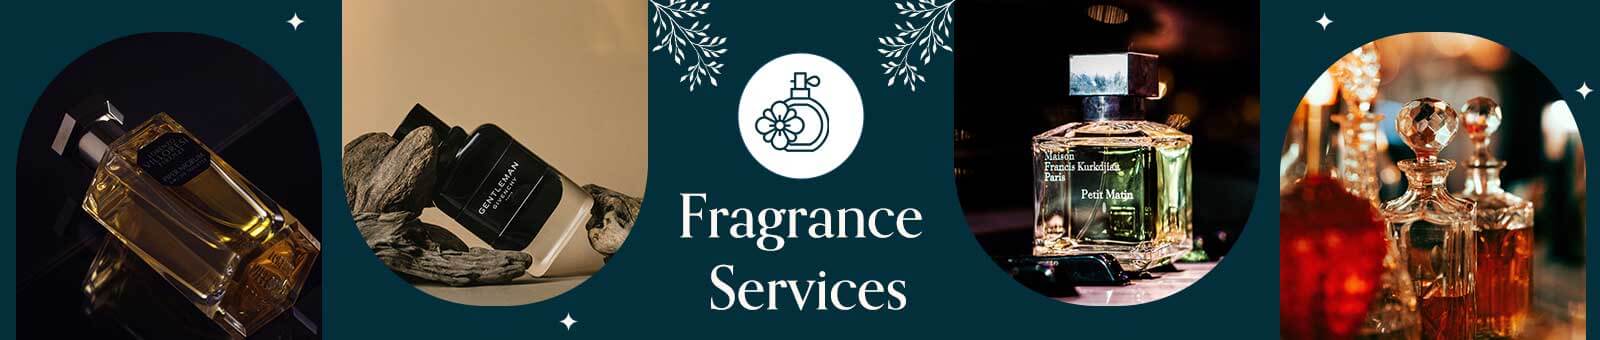 Fragrance Services